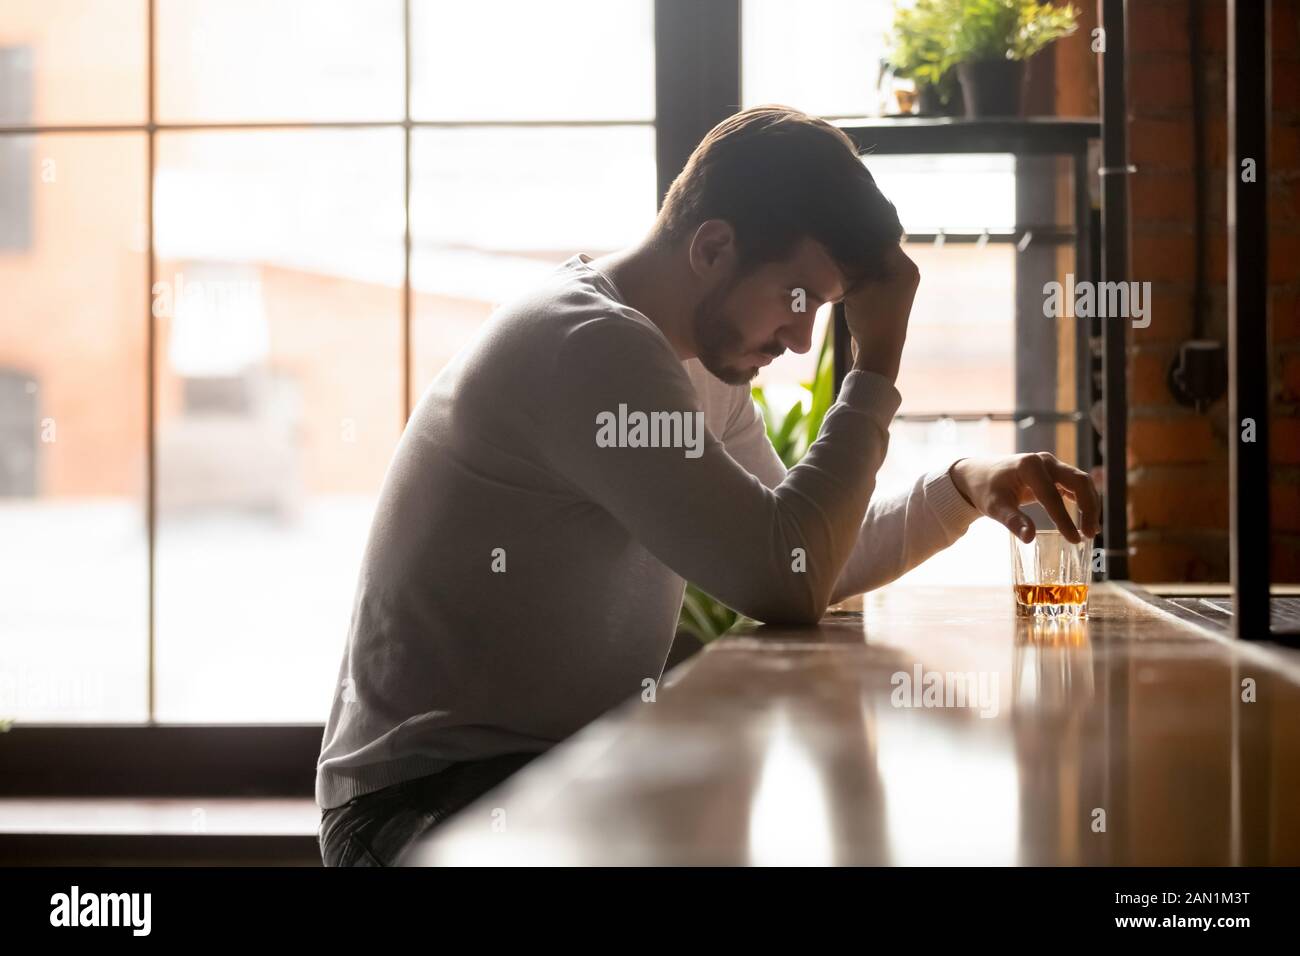 Depressed male drinking alone thinking having life problems Stock Photo